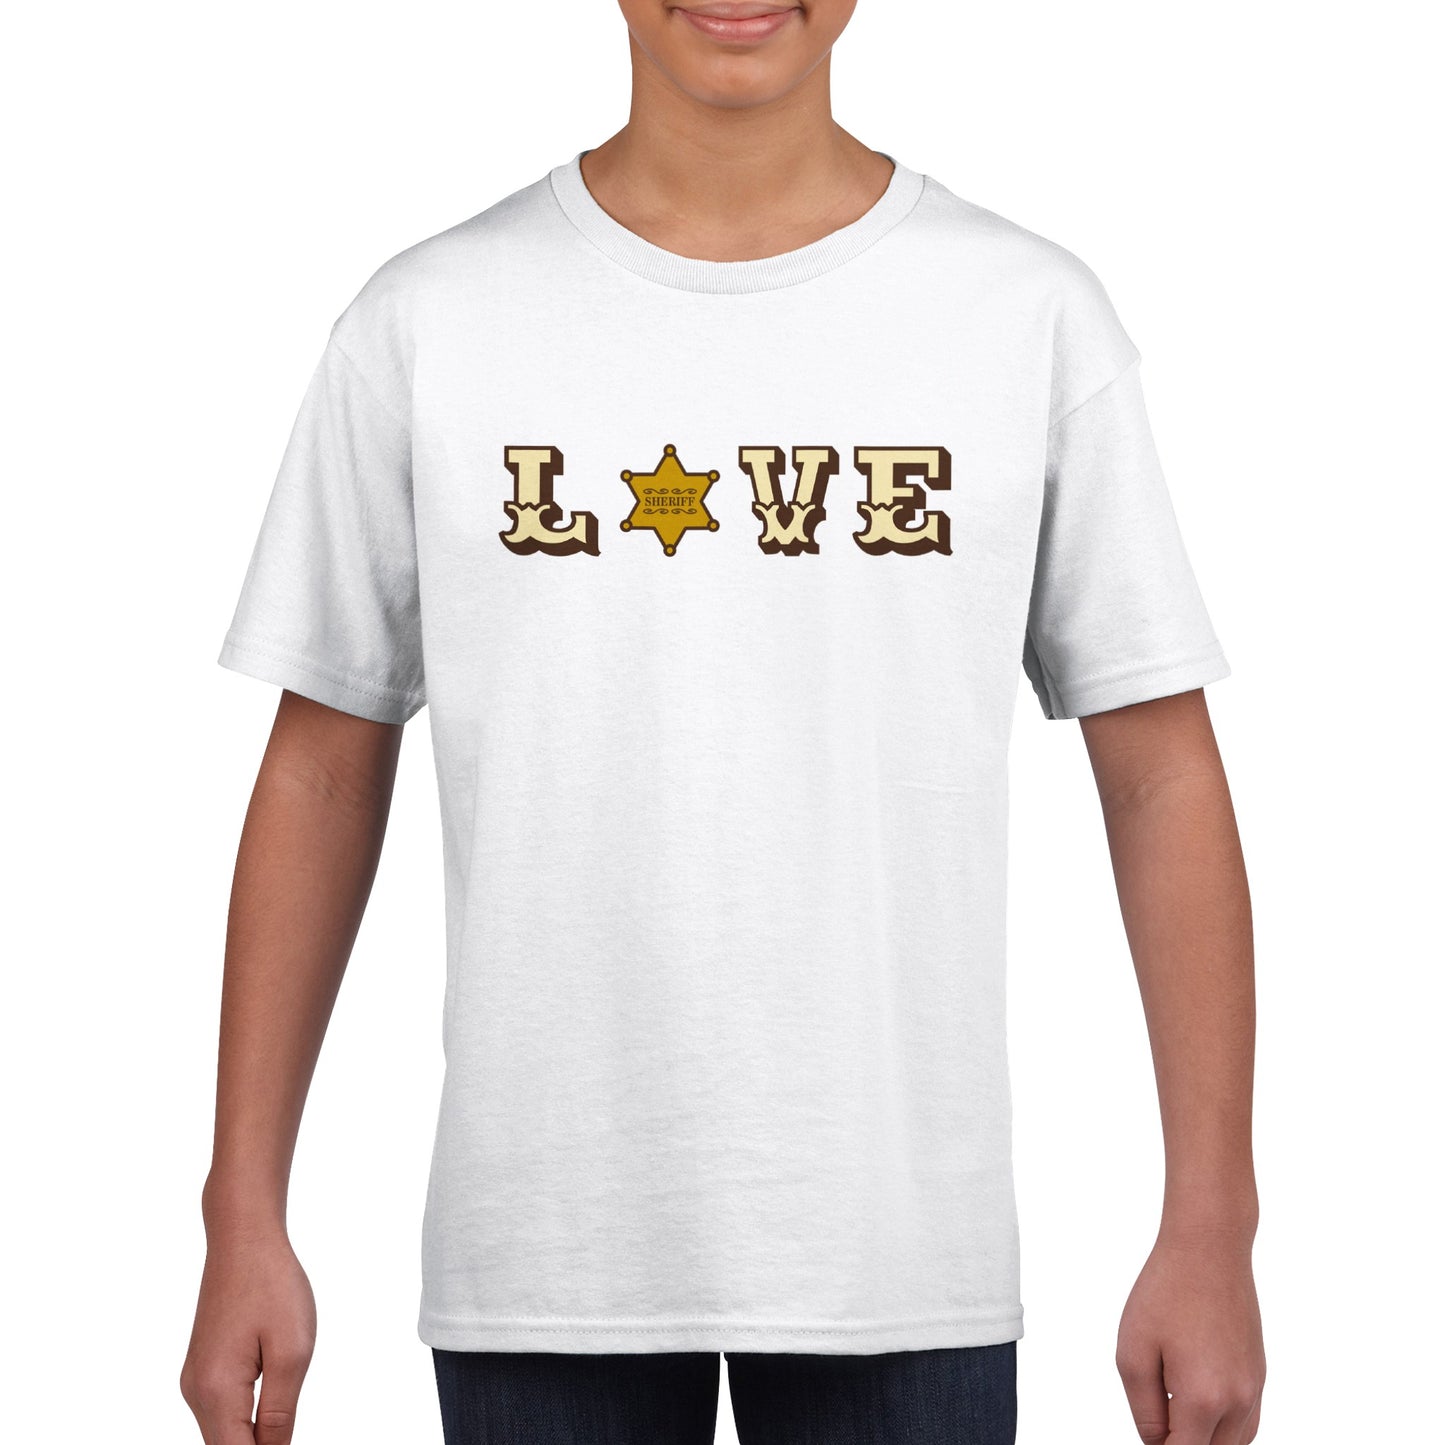 Sheriff Love T-shirt Boys